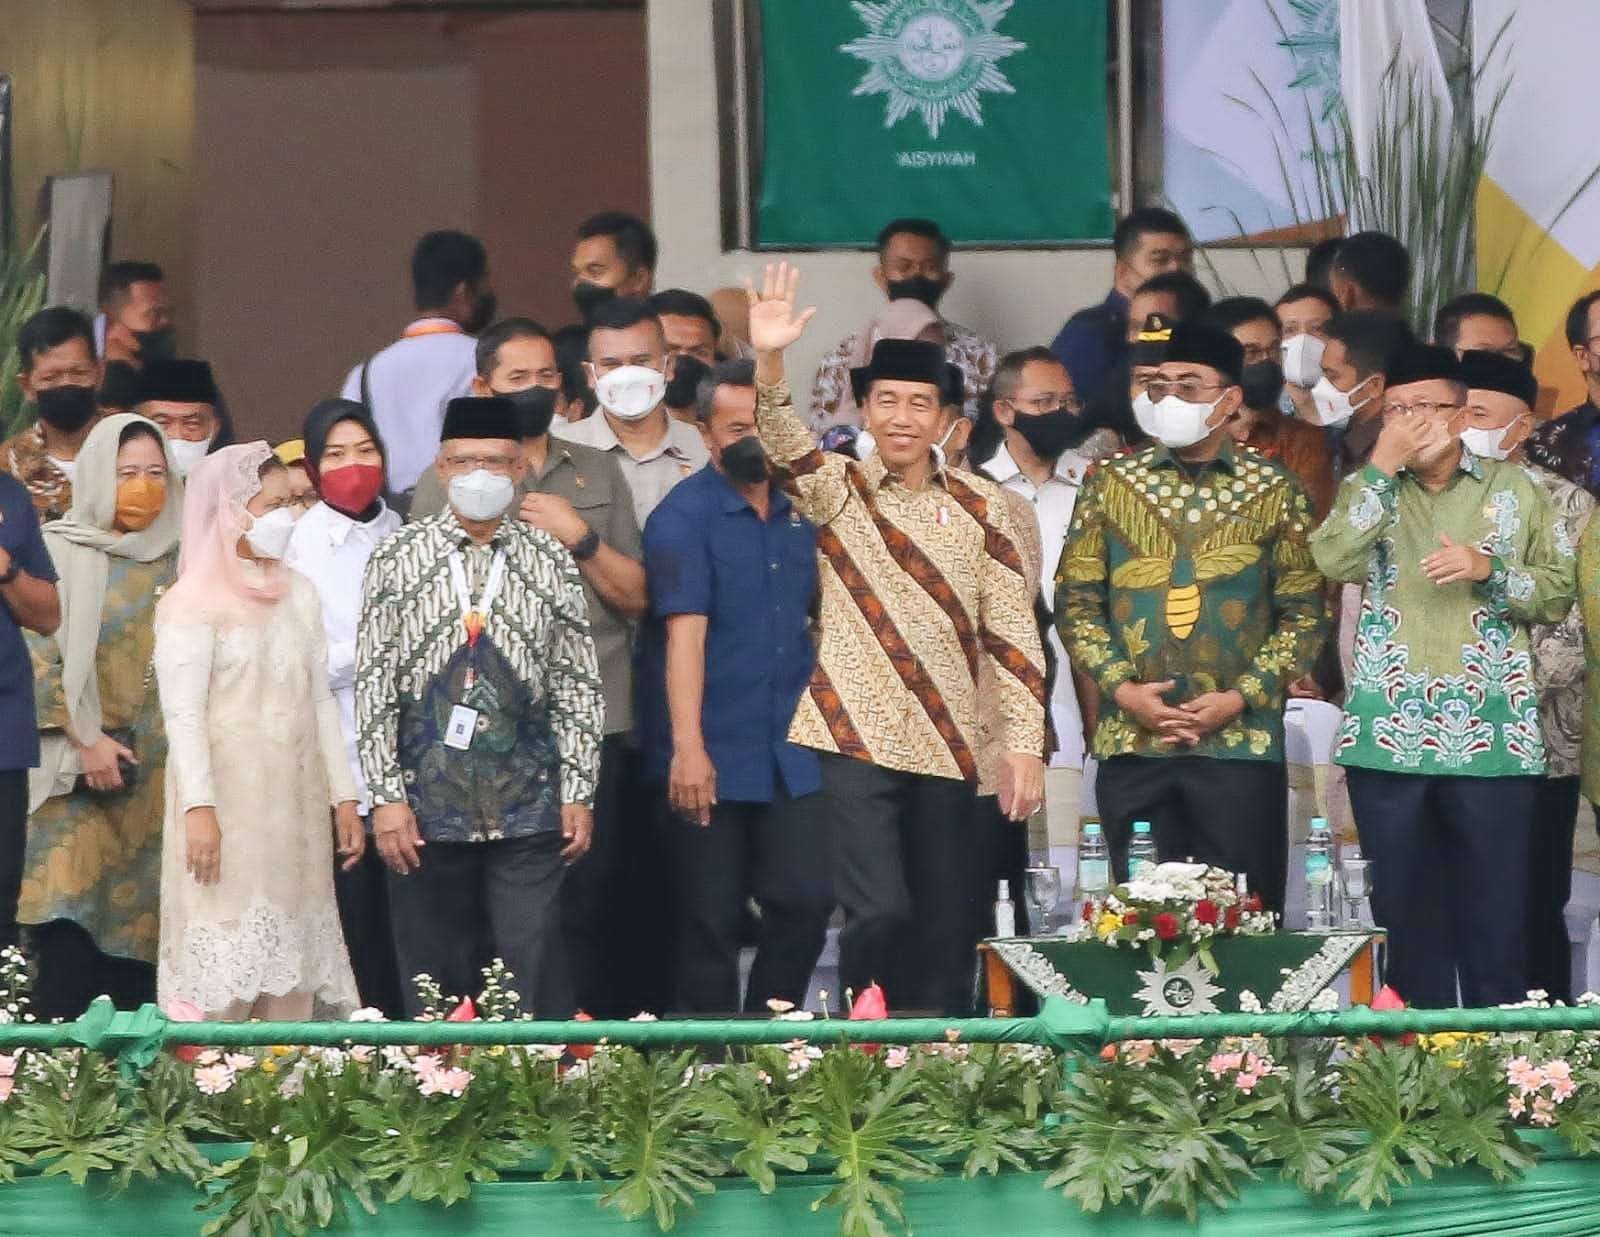 Presiden Joko Widodo saat menghadiri Pembukaan Muktamar ke-48 Muhammadiyah dan Aisyiyah di Surakarta, Sabtu 19 November 2022. (Foto: md.or.id)